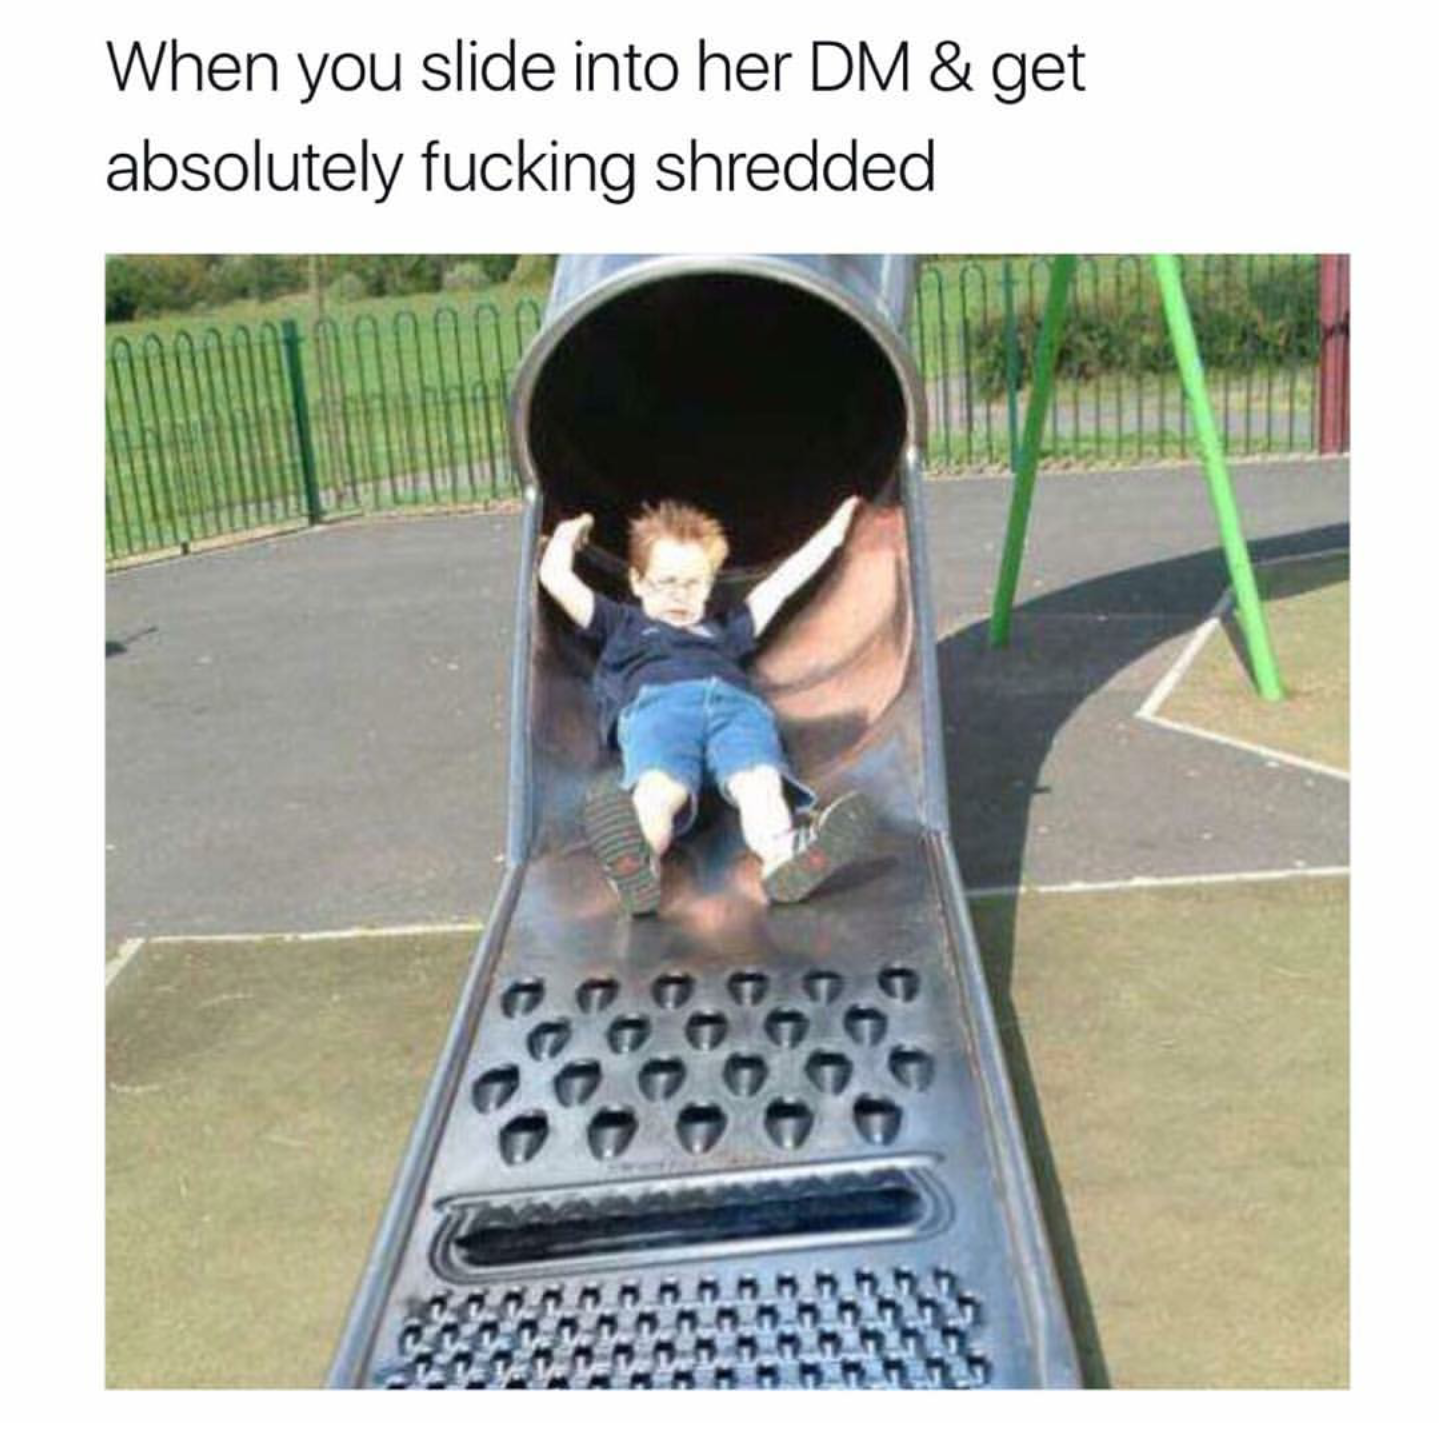 funny meme about sliding into dms meme - When you slide into her Dm&get absolutely fucking shredded